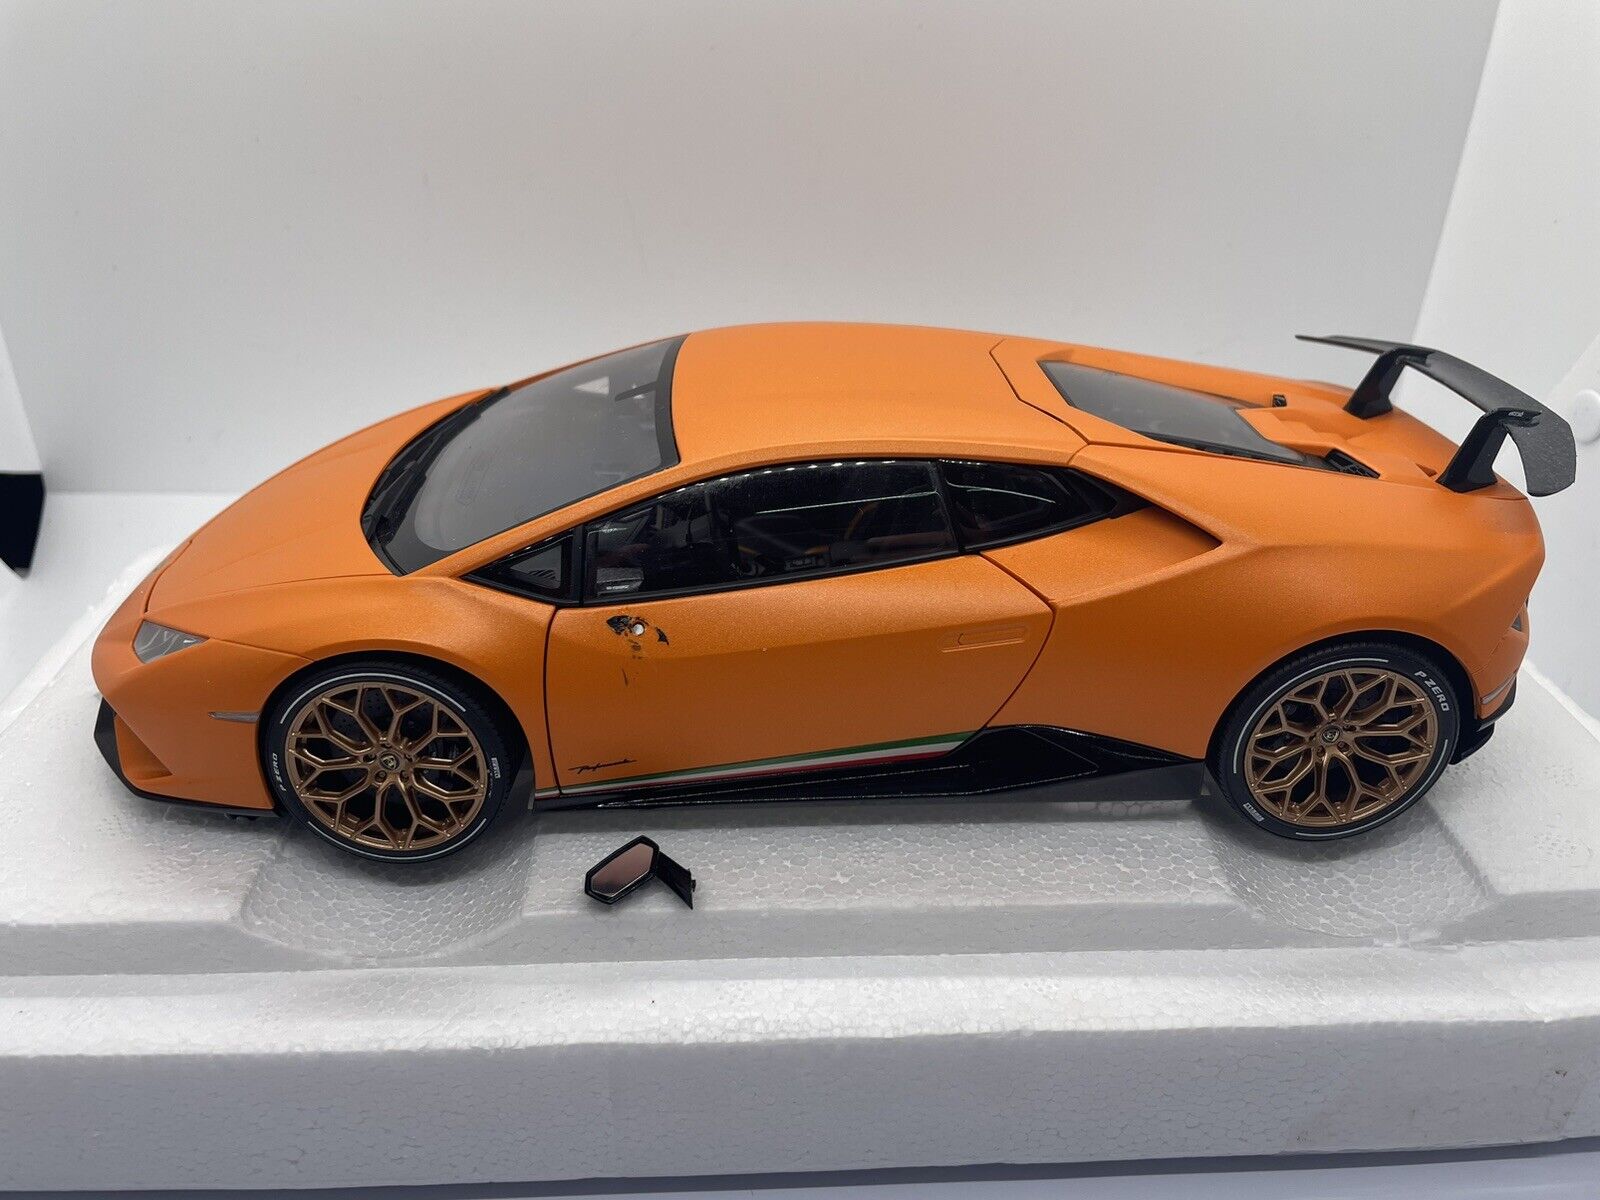 1/18 Autoart Lamborghini Huracan Performante 79152 Model Toy Orange BROKE MIRROR